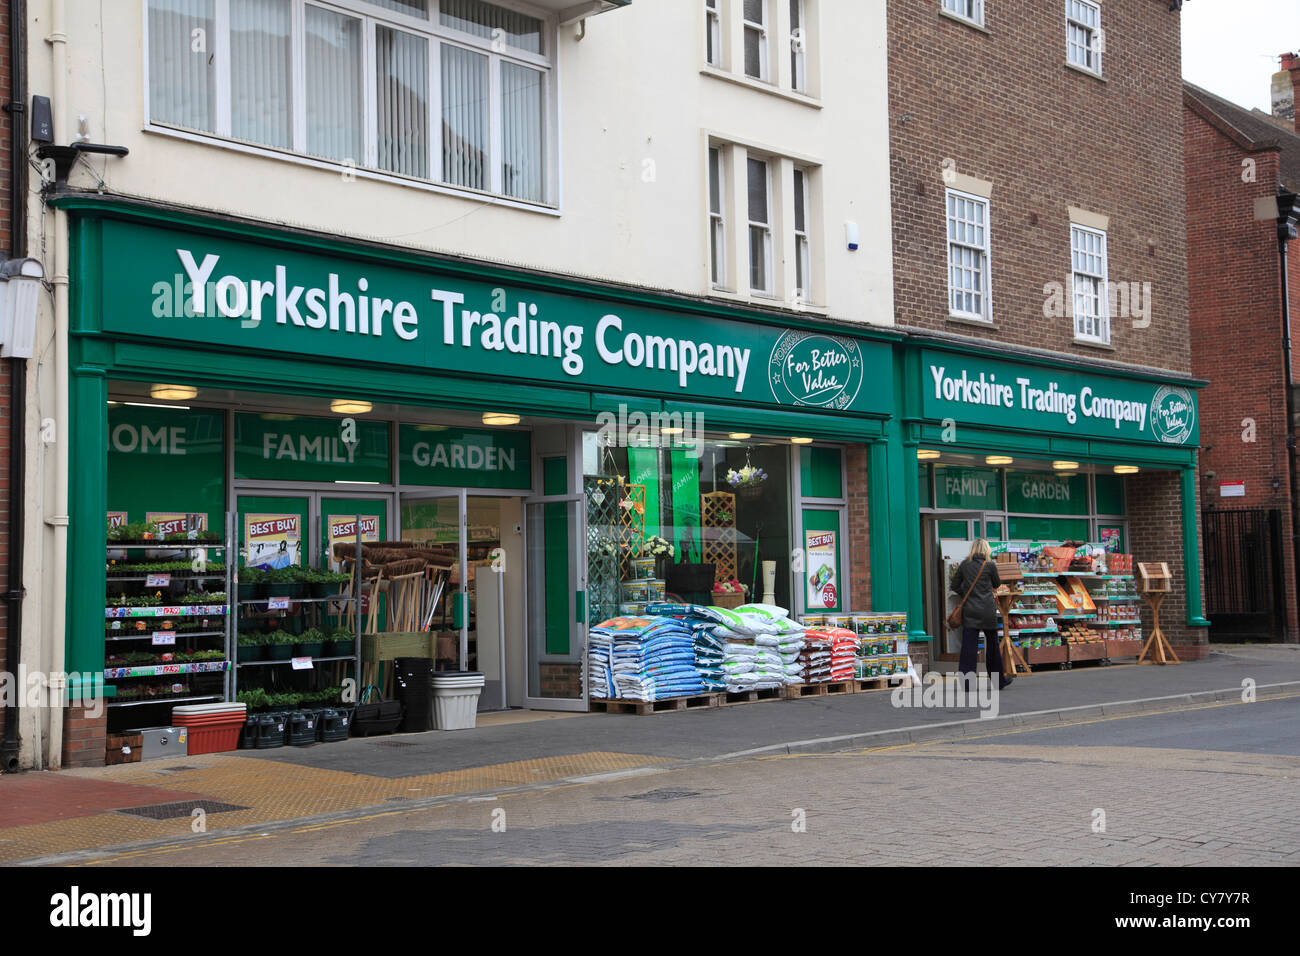 Yorkshire Trading Company, Driffield, Market Town, East Riding, Yorkshire, England, UK Stock Photo